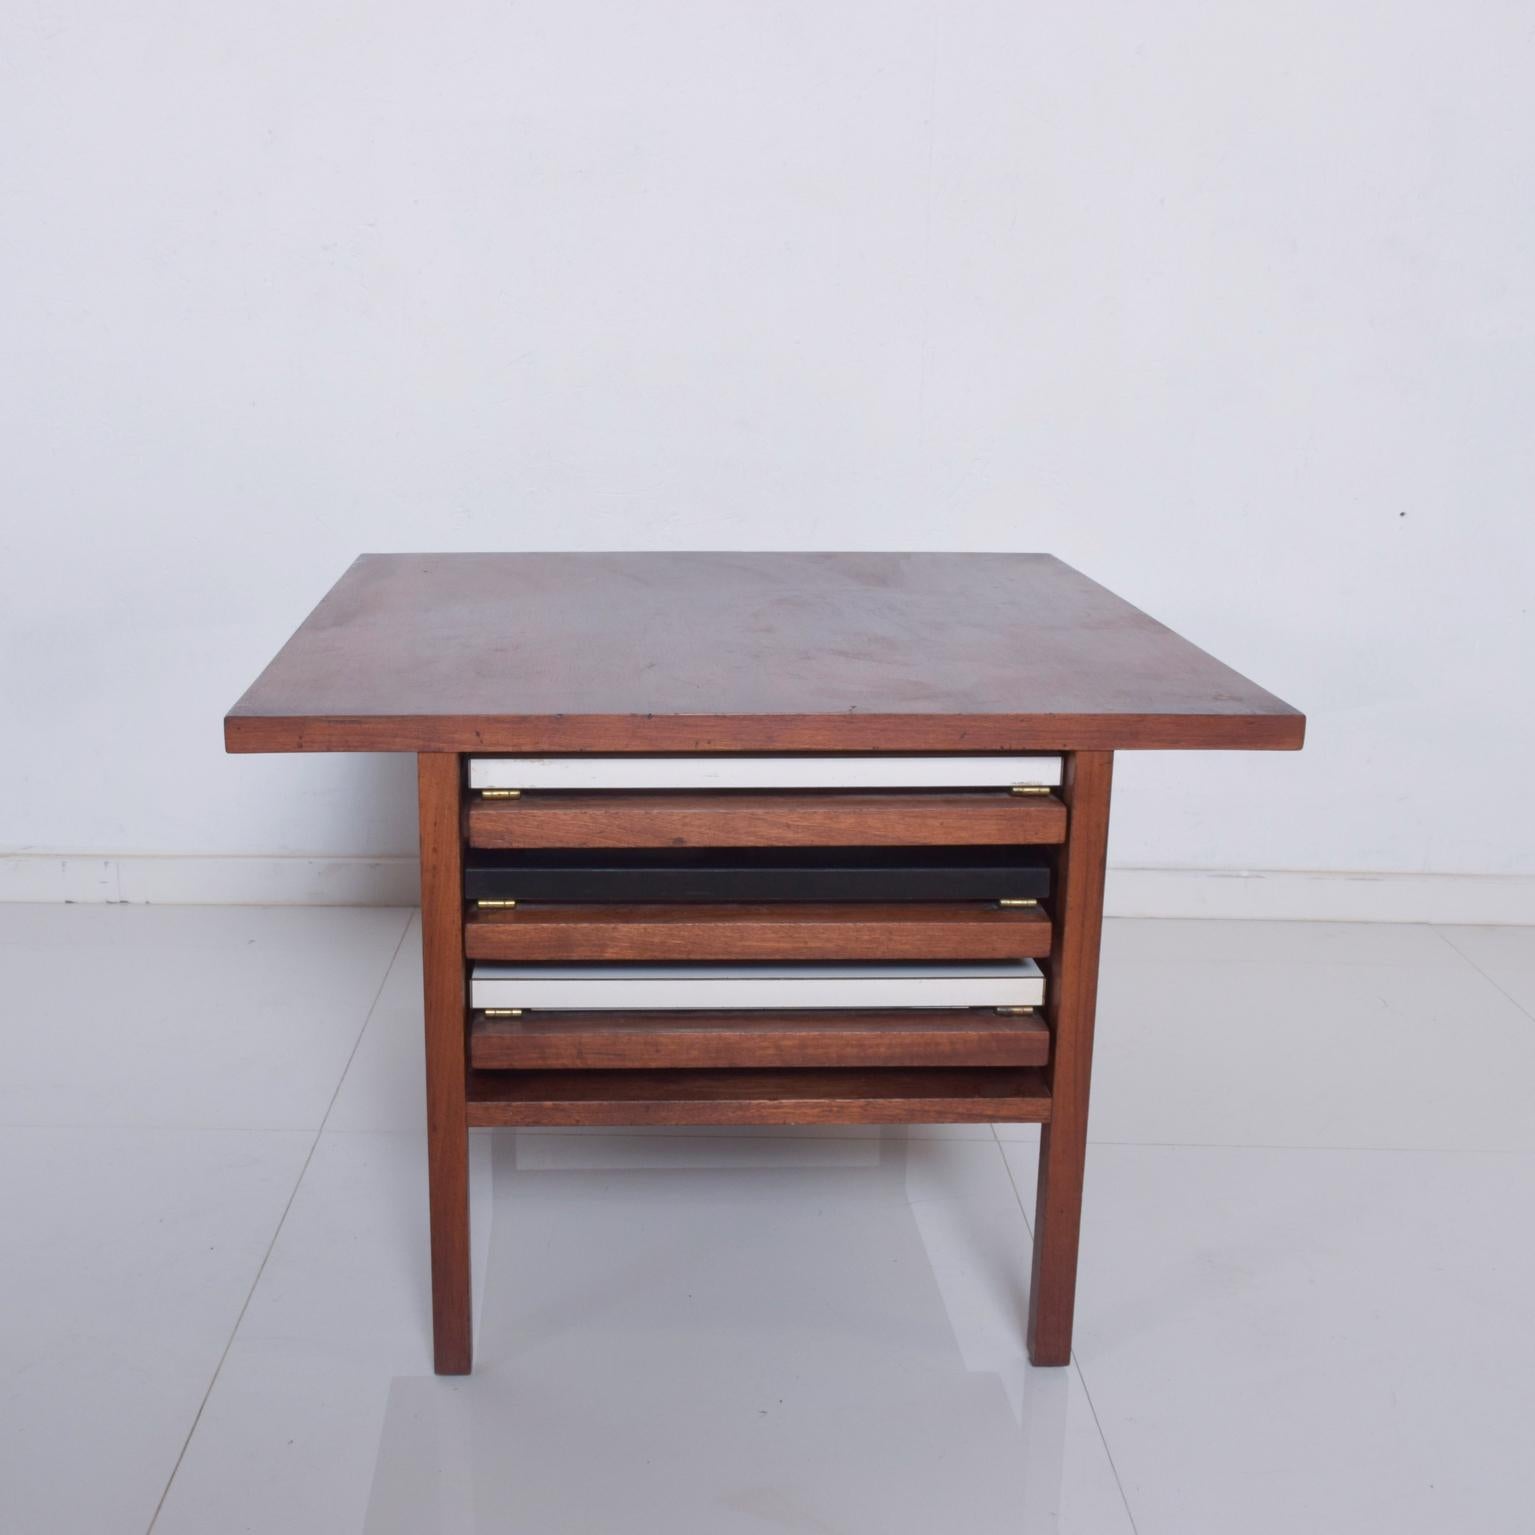 Mid-Century Modern Walnut Coffee Table w/ Nesting Side Tables by John Keal for Brown Saltman 1960s